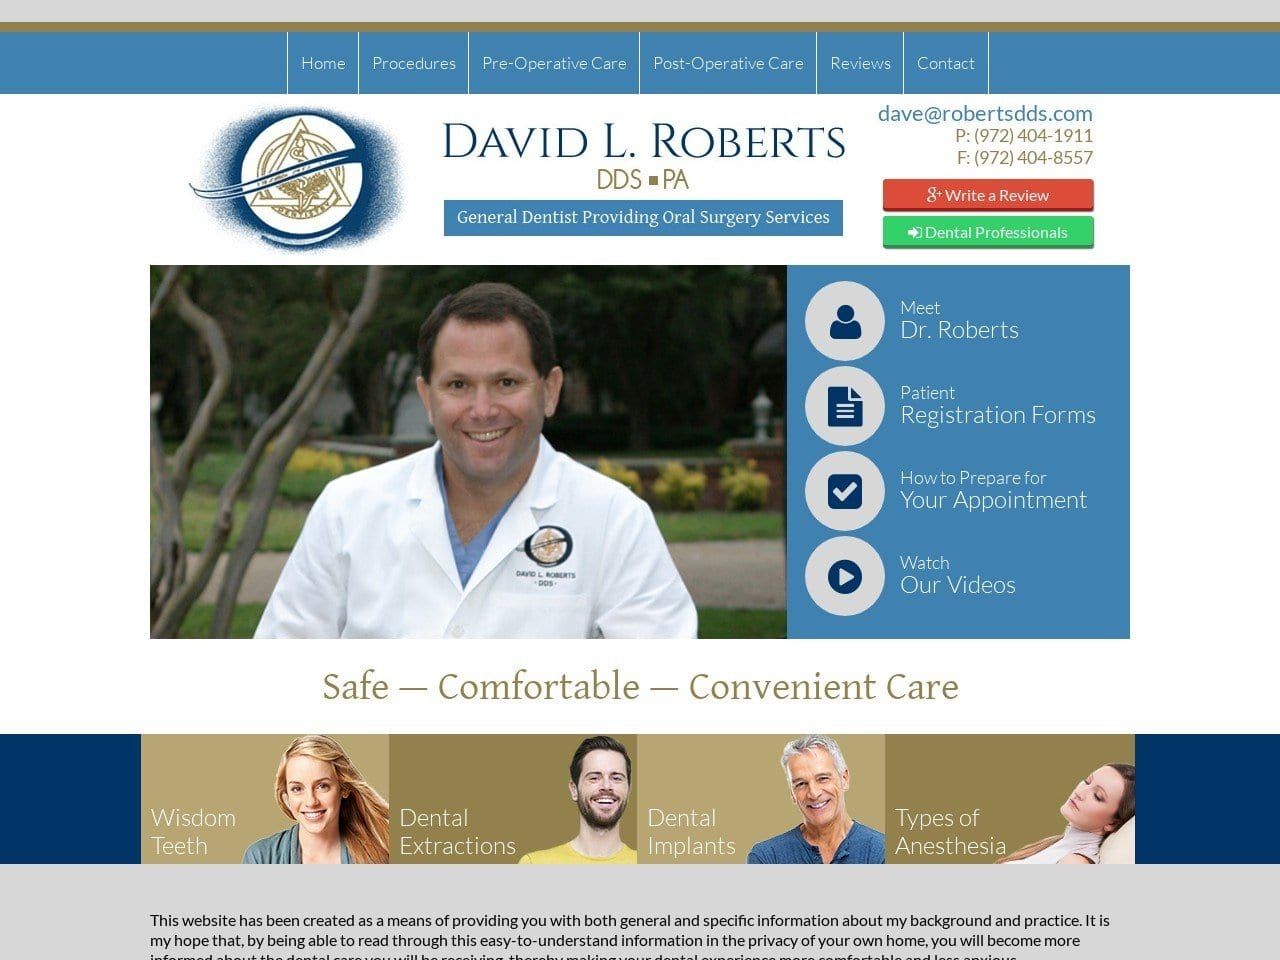 Dr. David L. Roberts DDS Website Screenshot from robertsdds.com